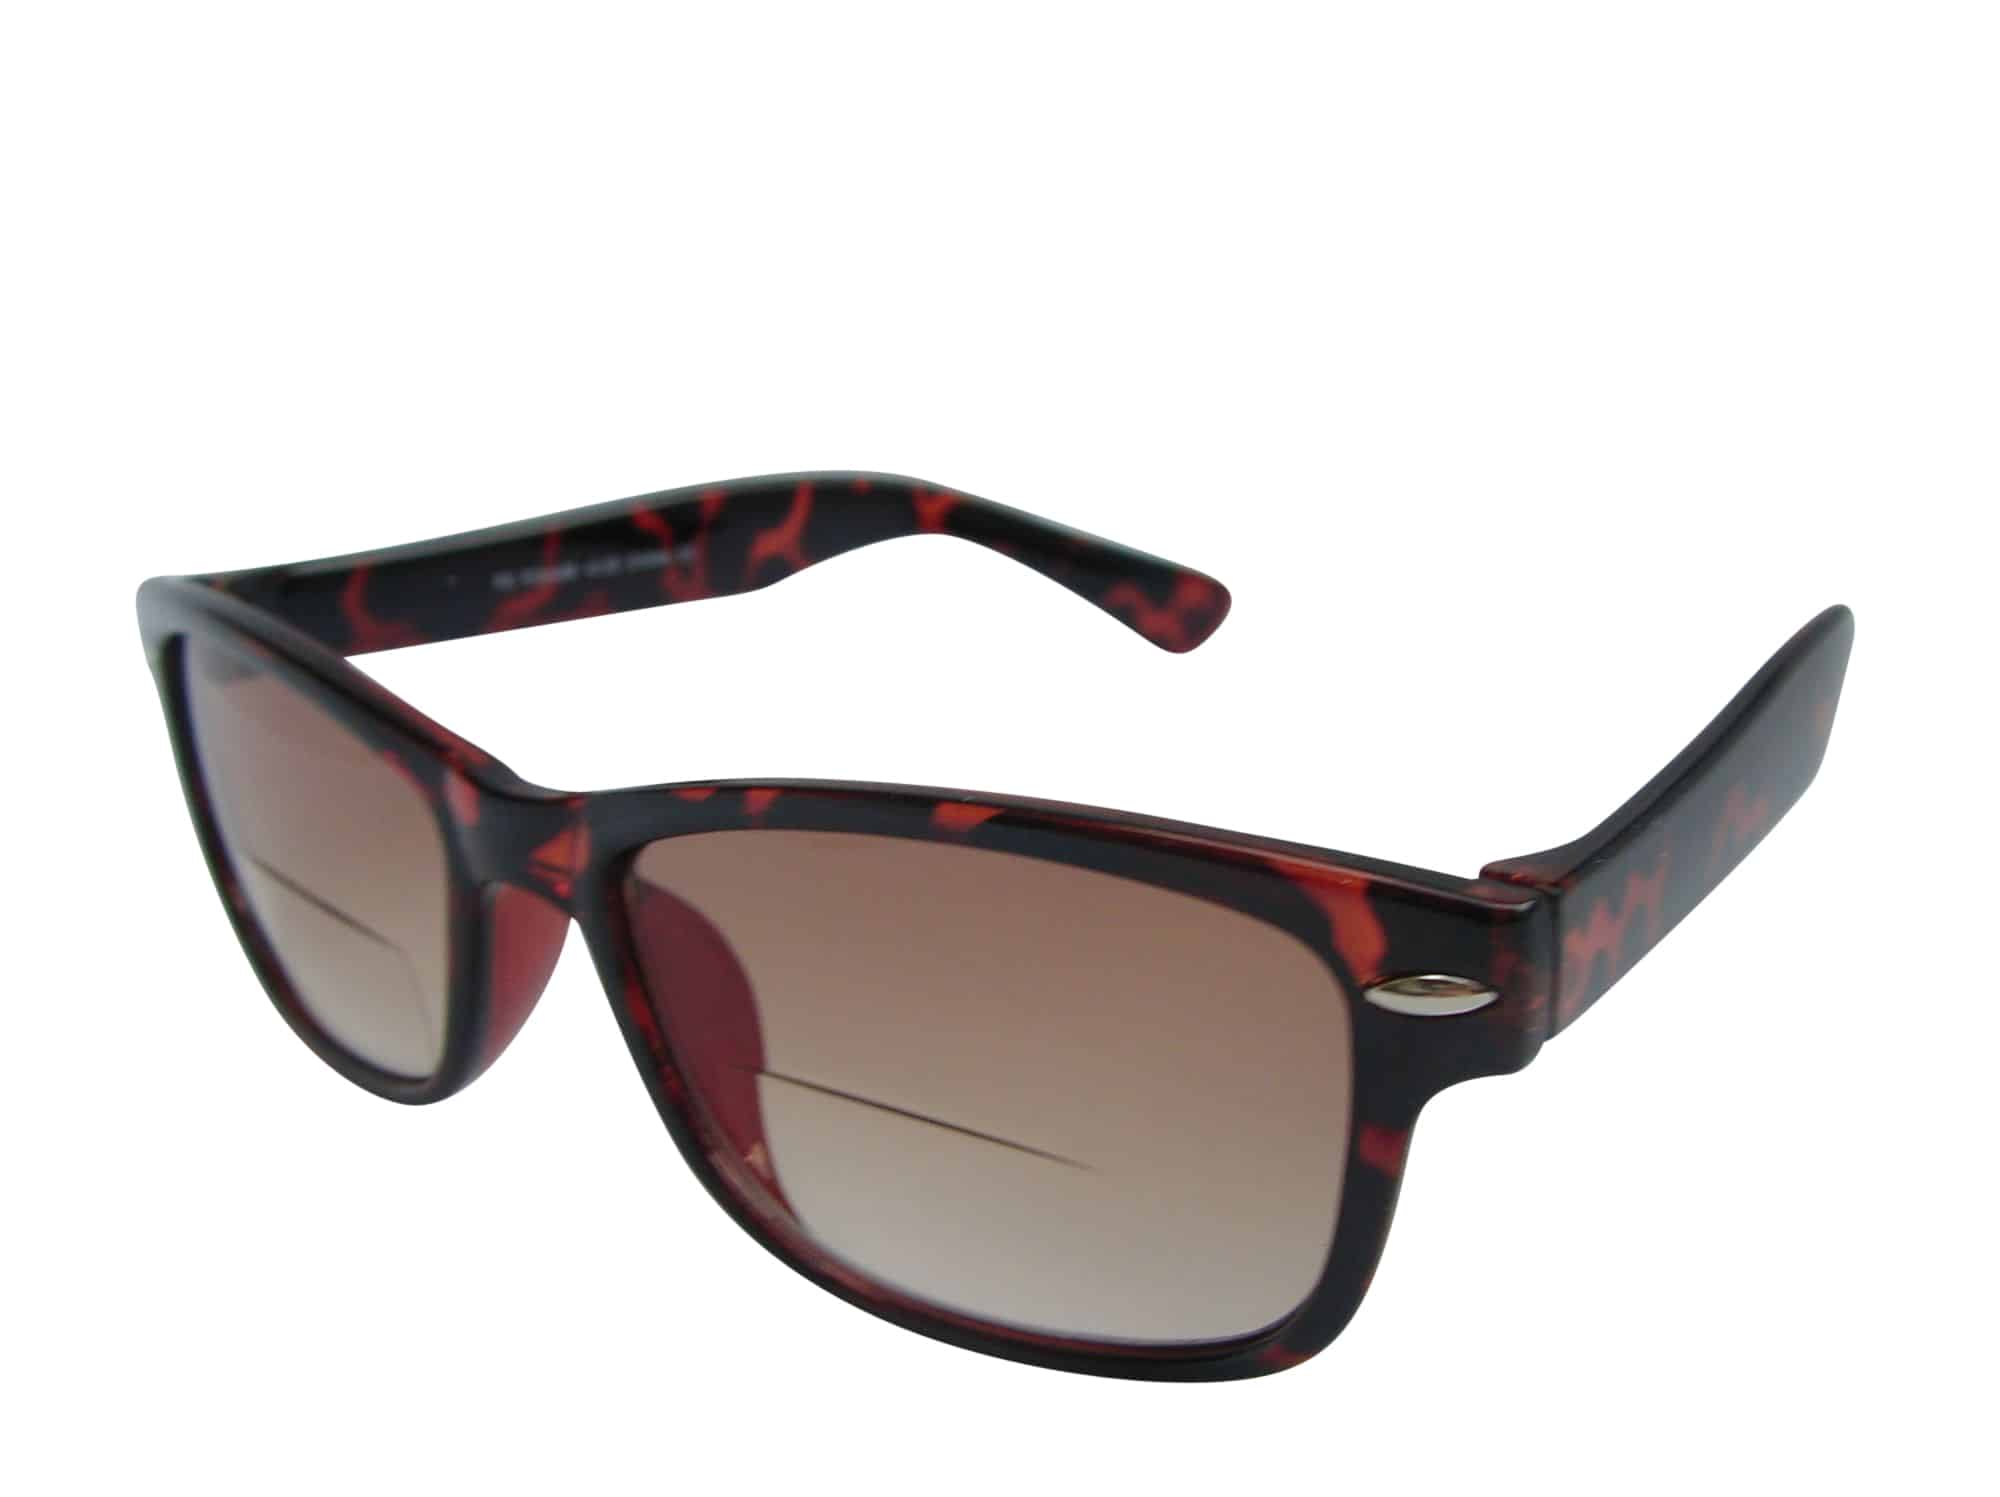 Wayfarer Bifocal Sunglasses in Tortoiseshell